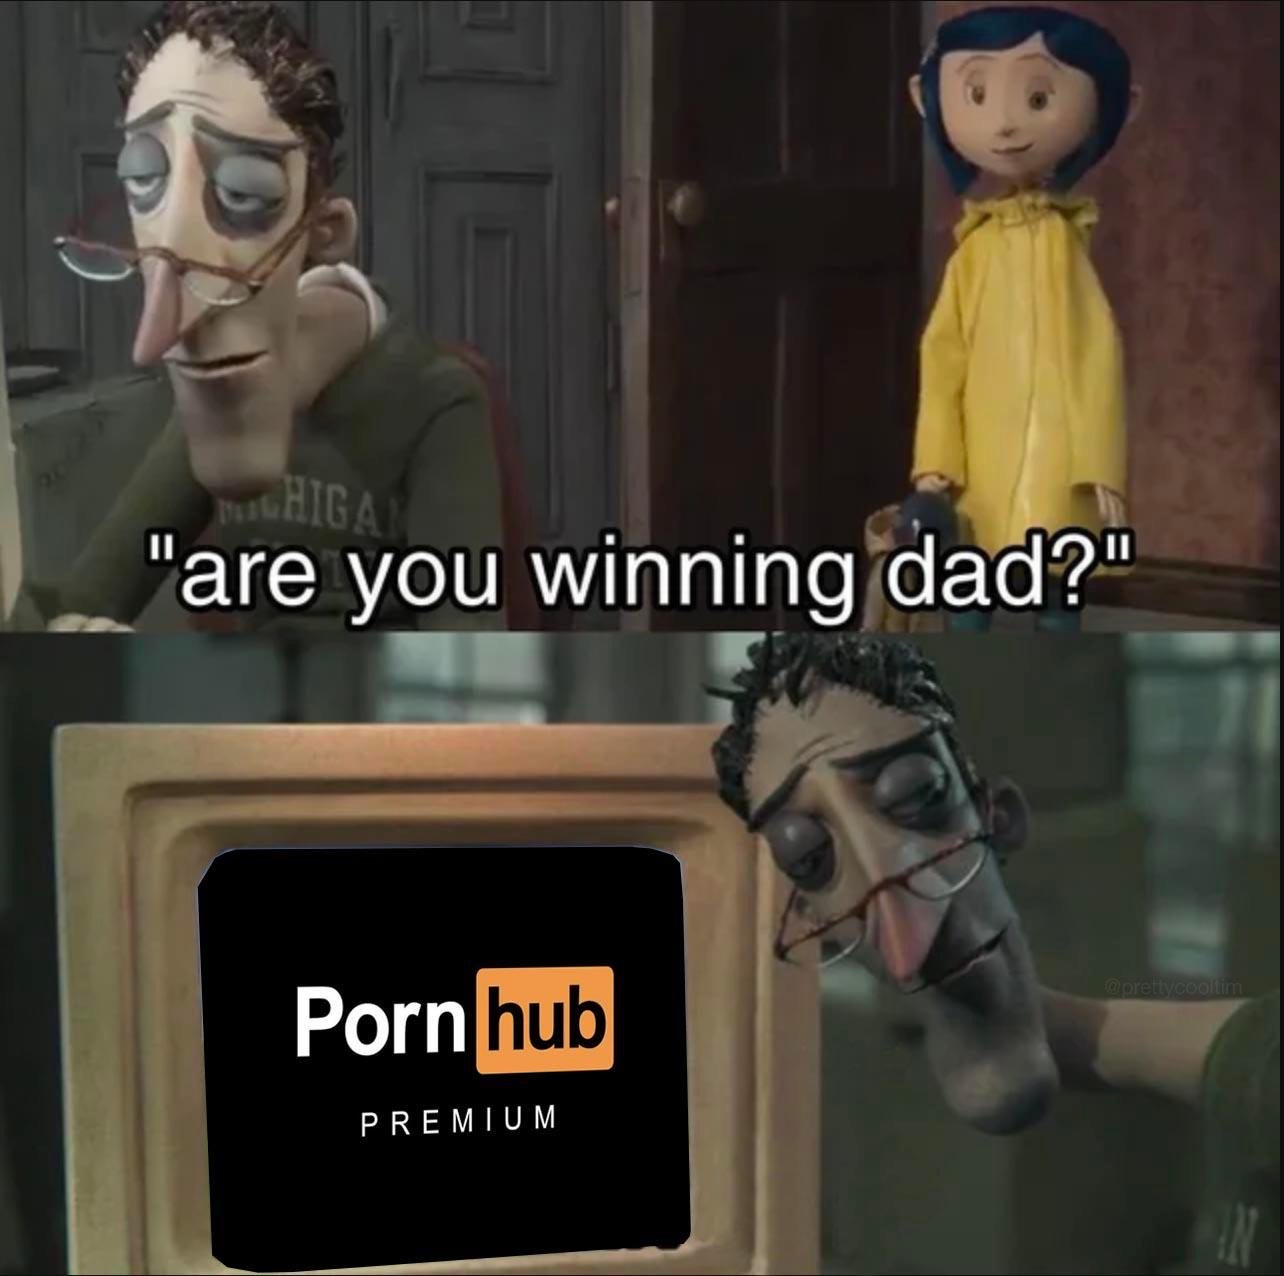 Higa "are you winning dad?" morettycoolim Porn hub Premium